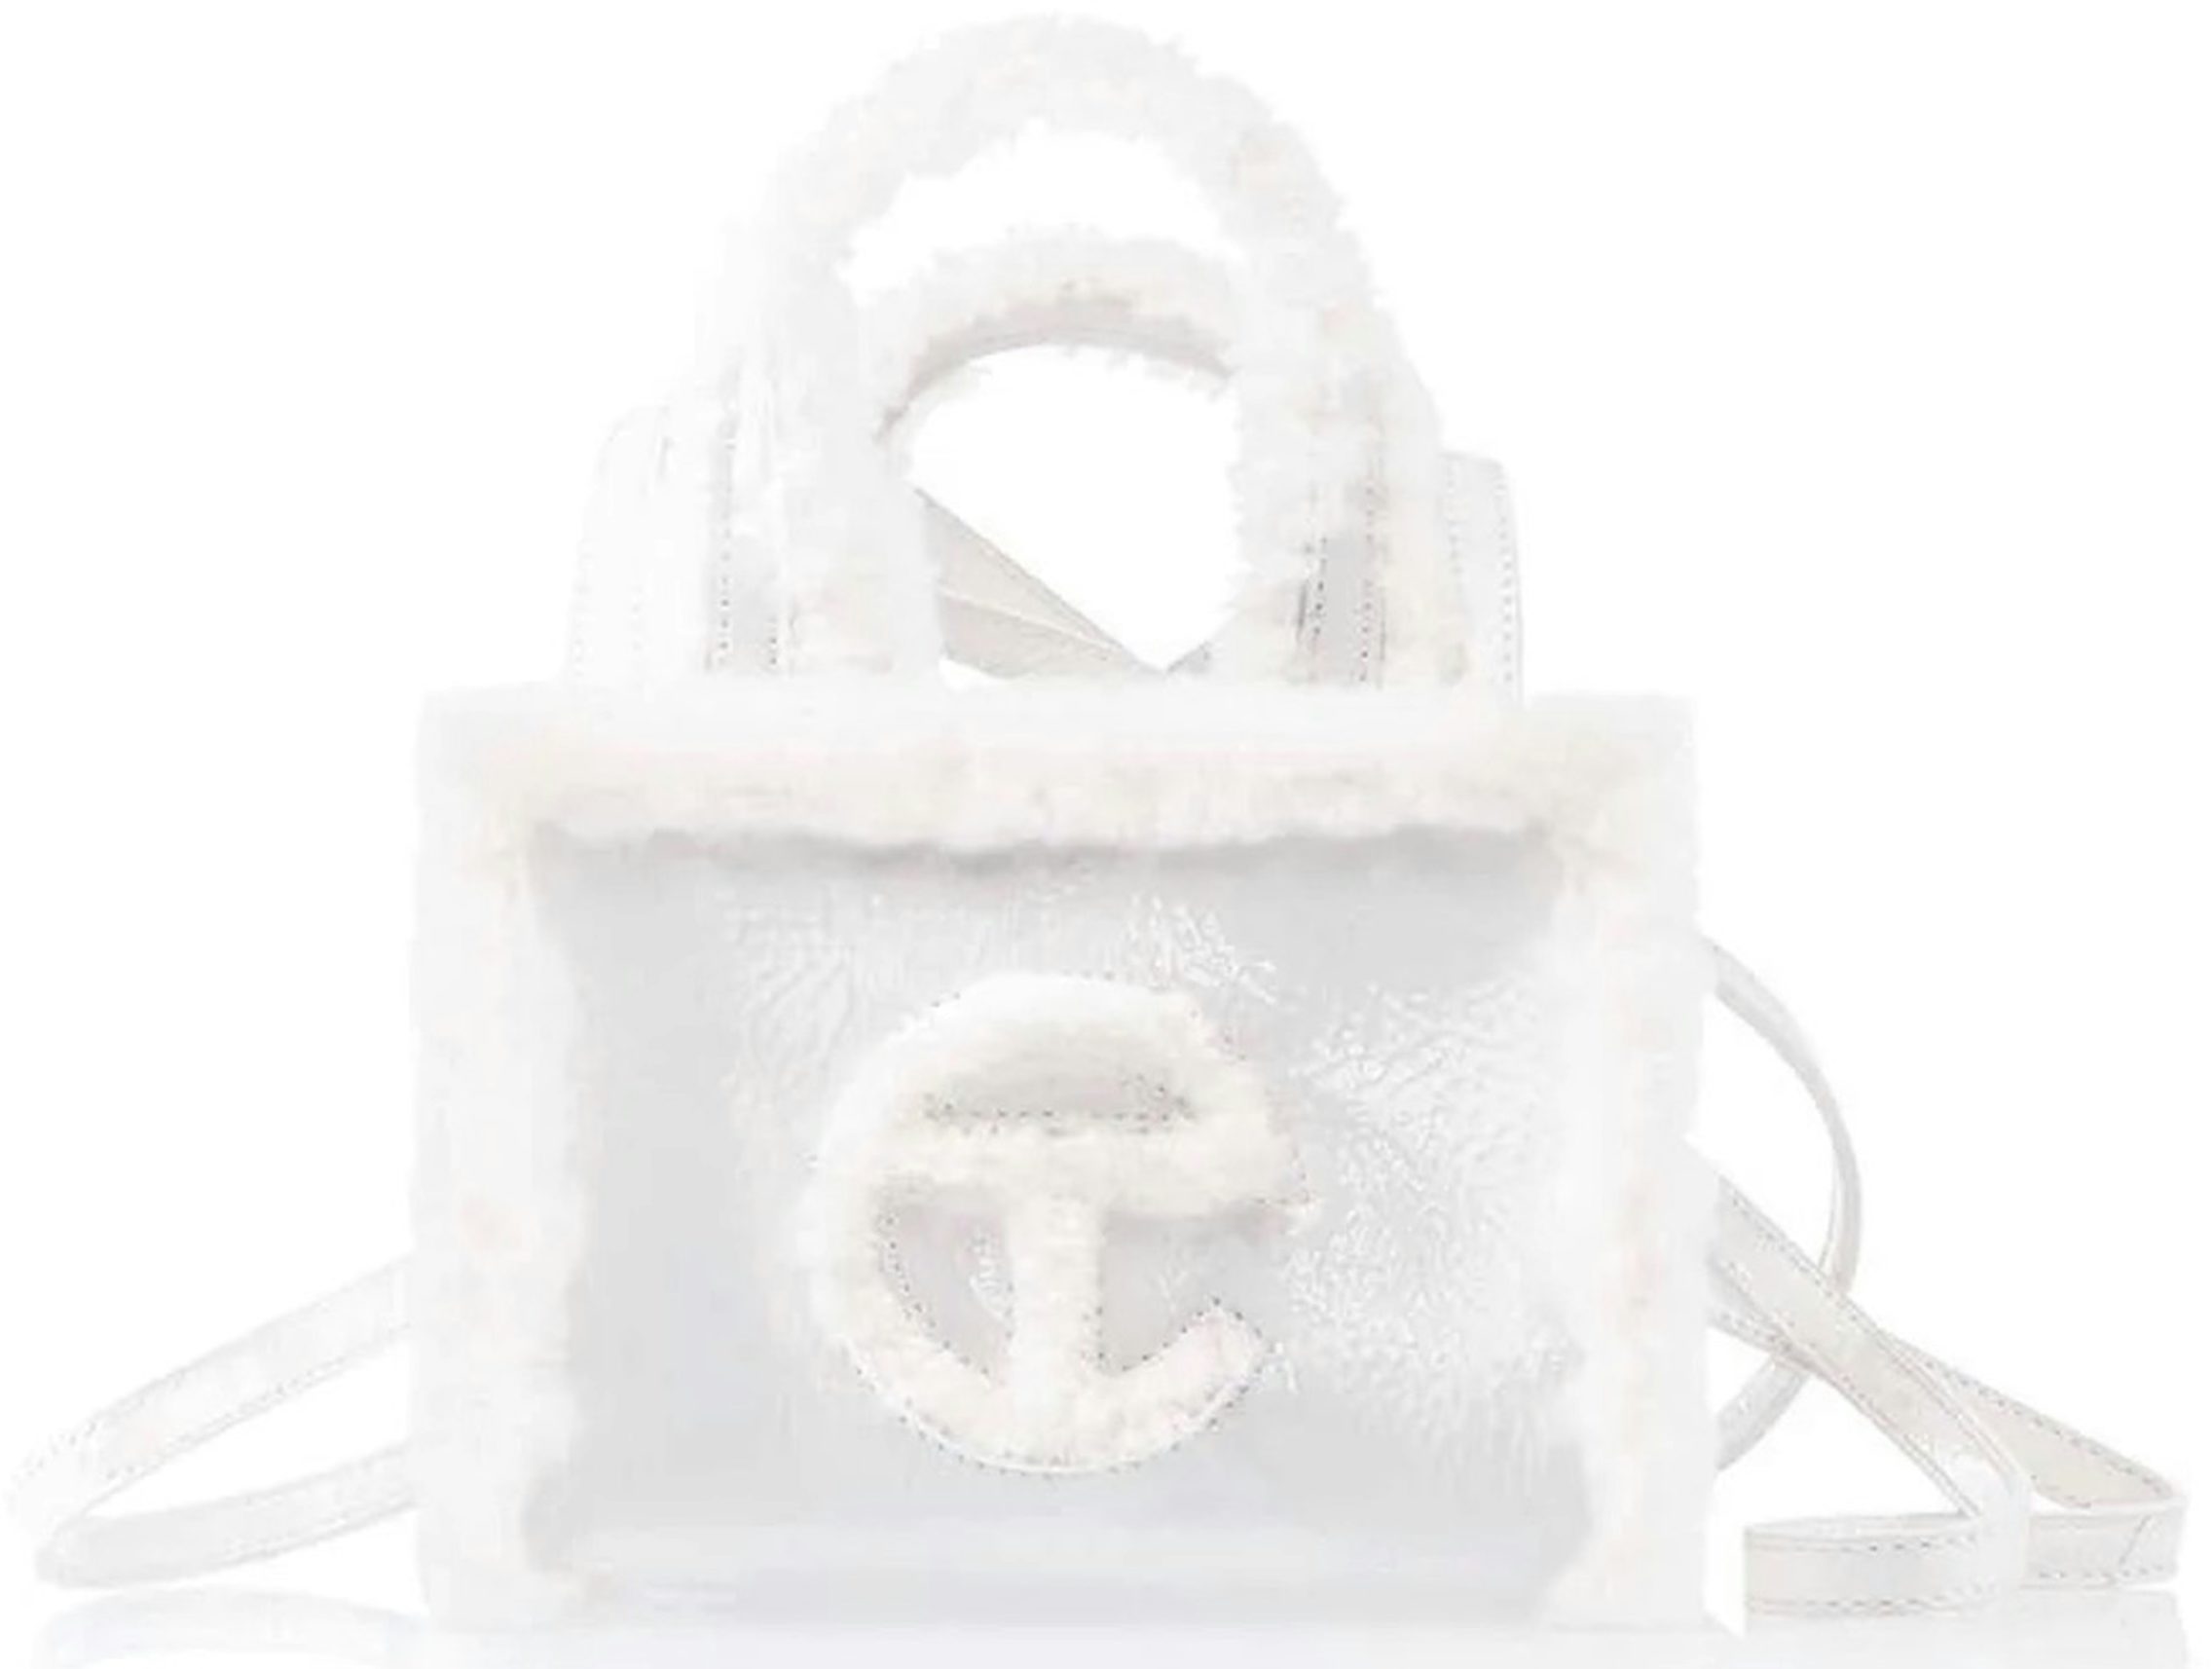 Chanel Patent Leather Transparent Mini Logo Tote